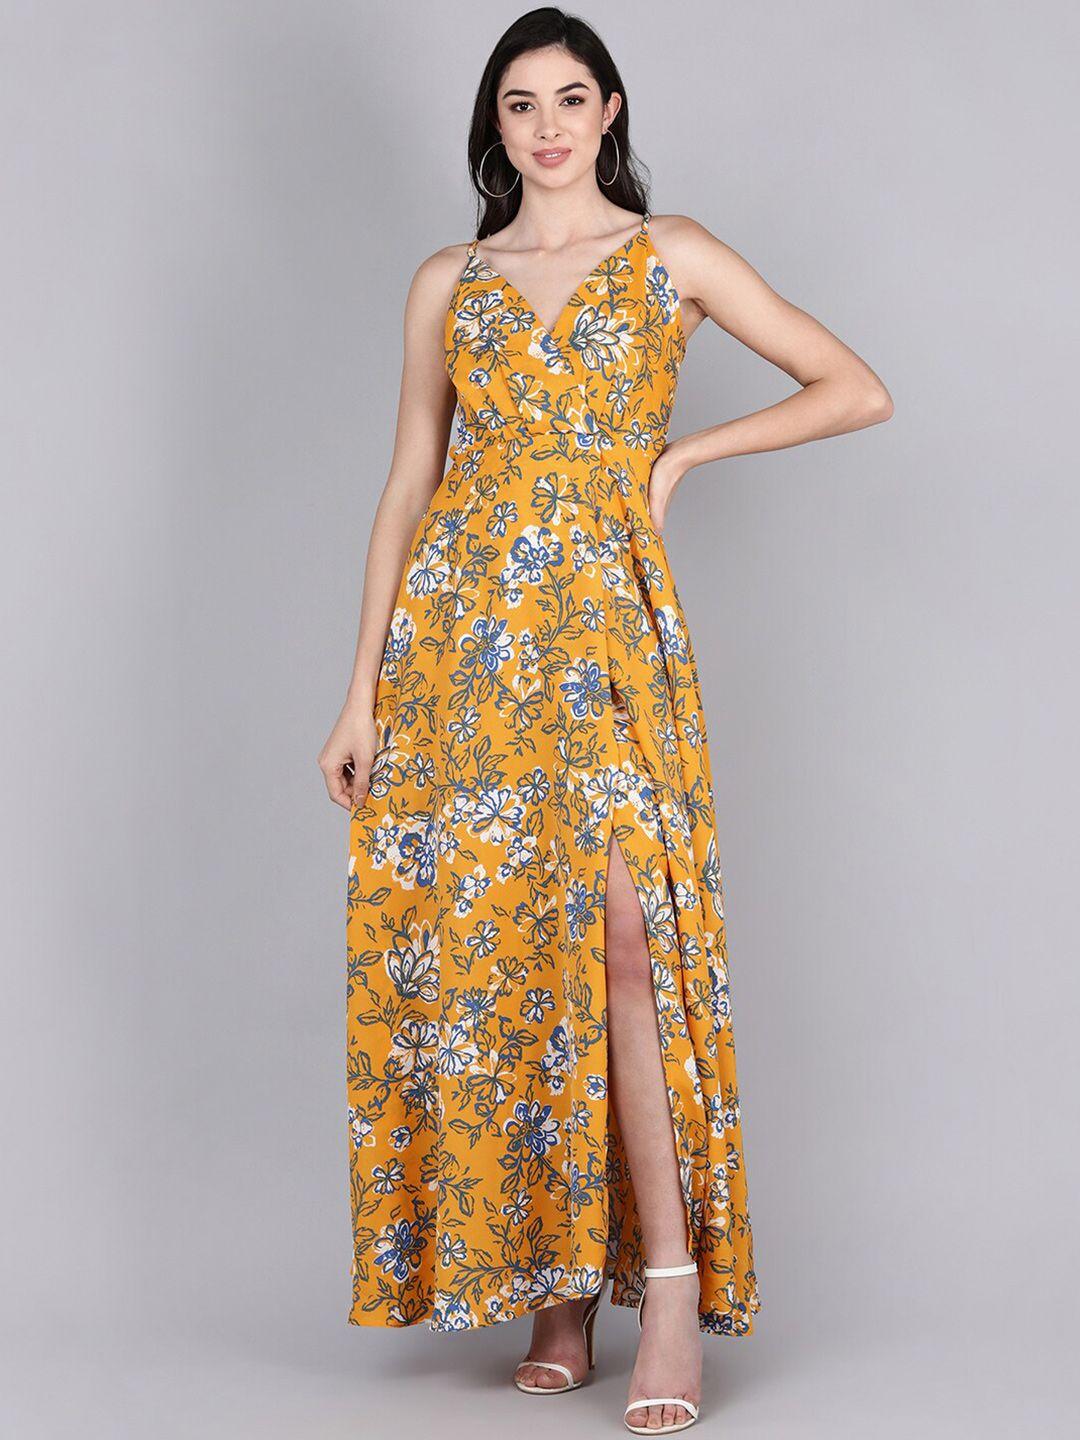 ahika mustard yellow & blue floral maxi dress